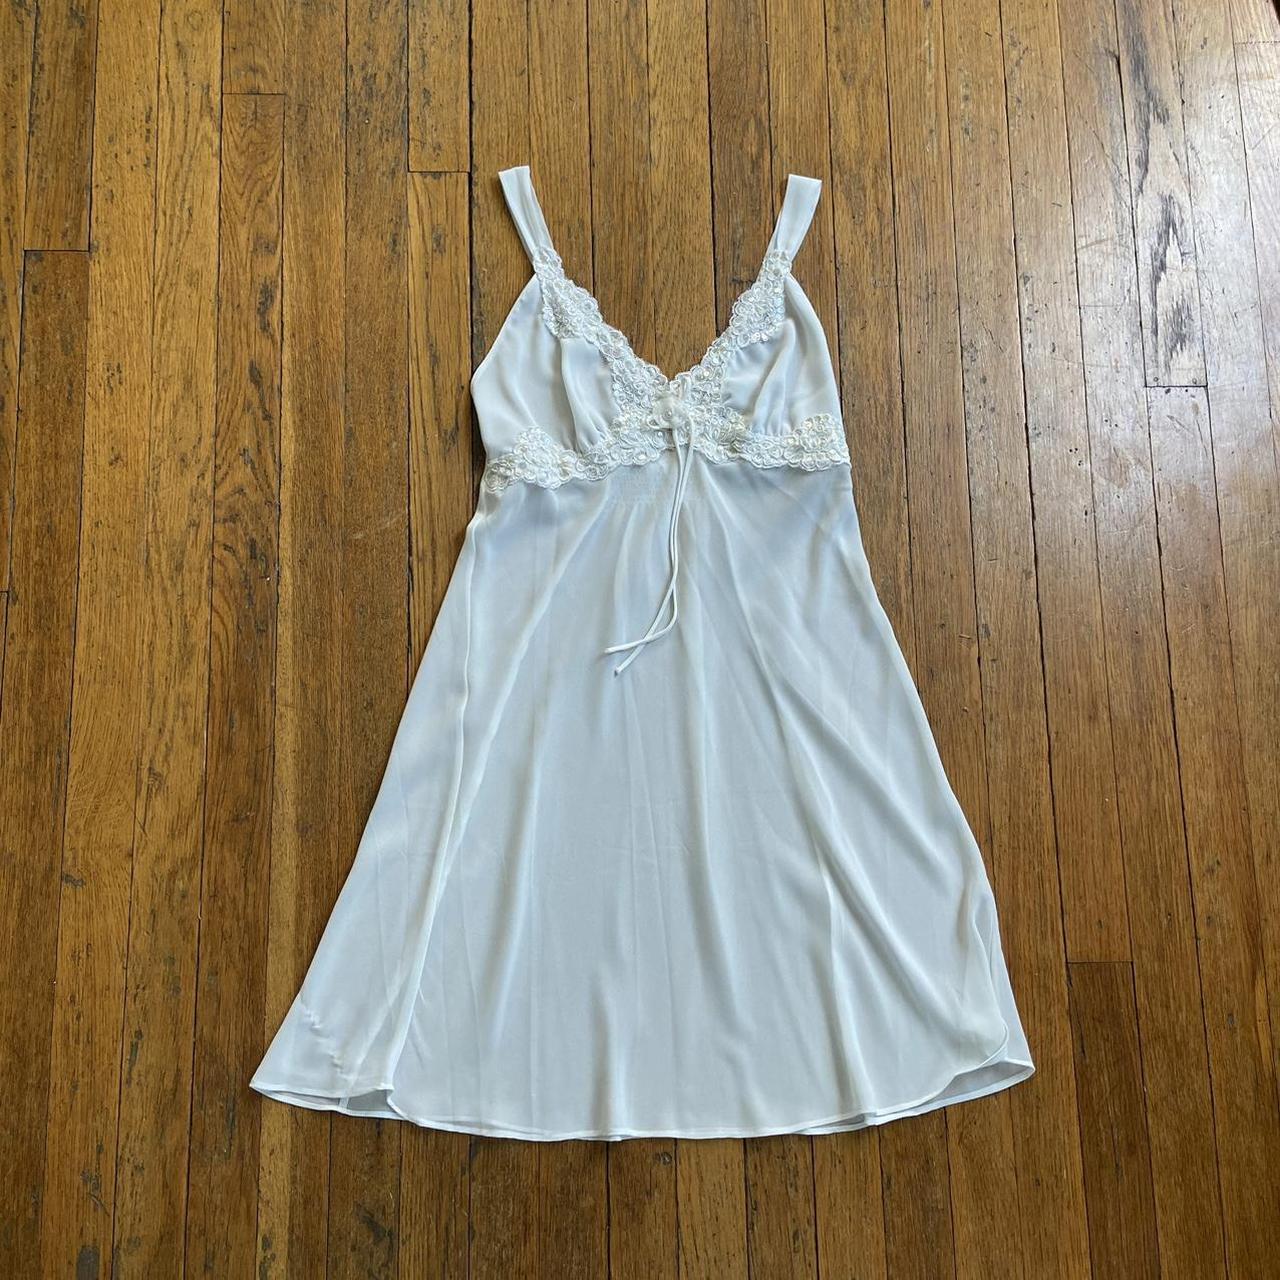 Sheer white slip dress -size medium (fits... - Depop